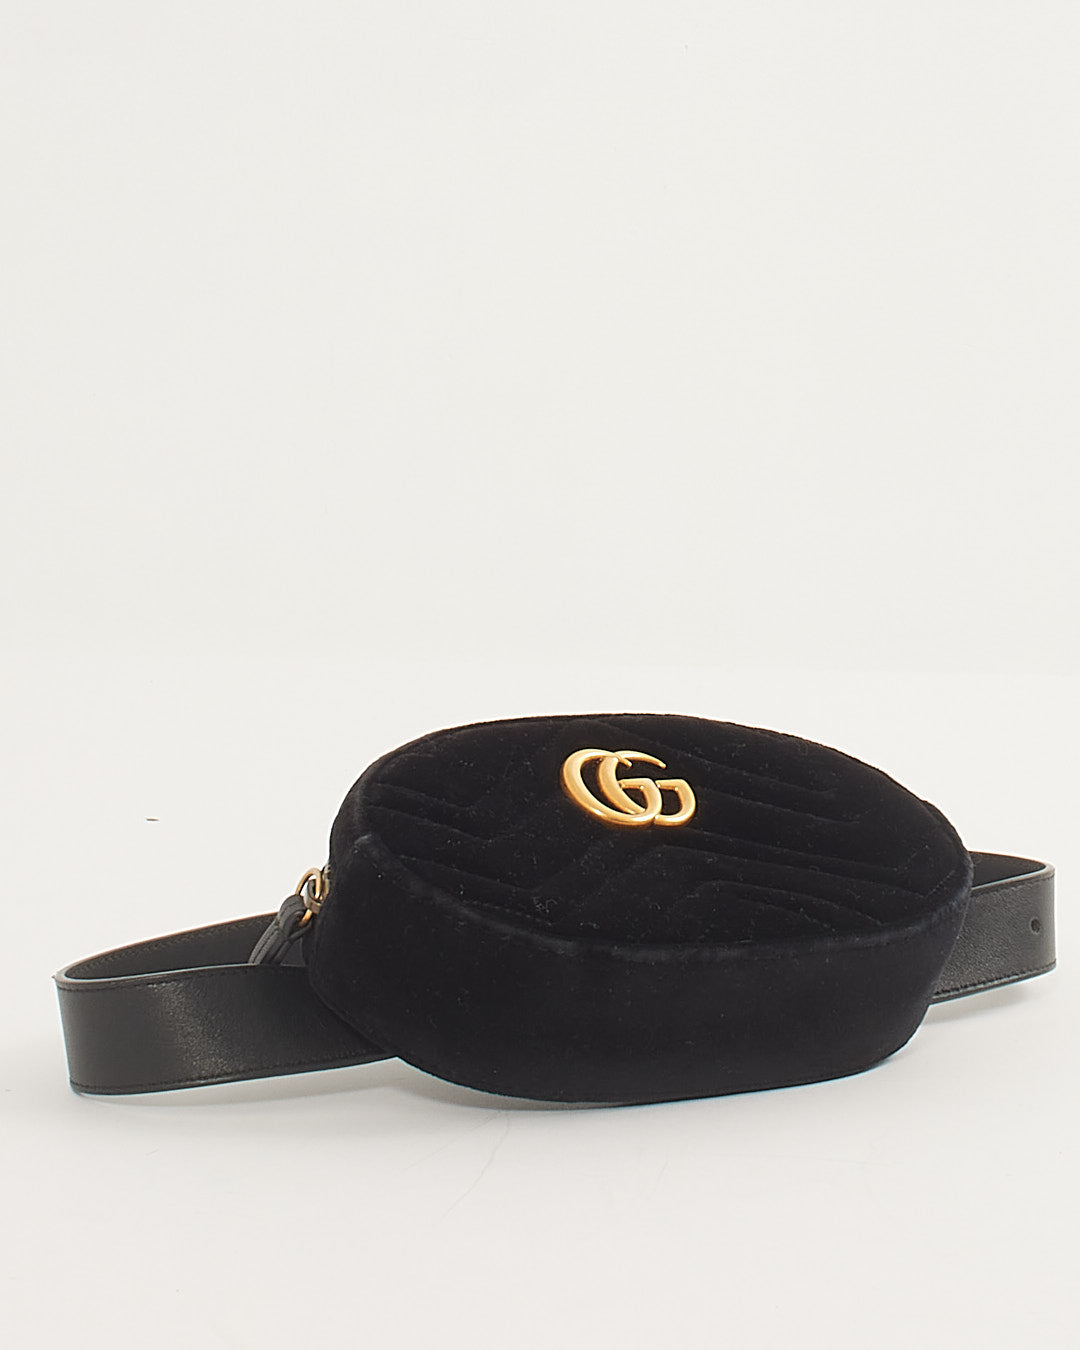 Sac ceinture Gucci Velvet Matelasse GG Marmont - 75/30